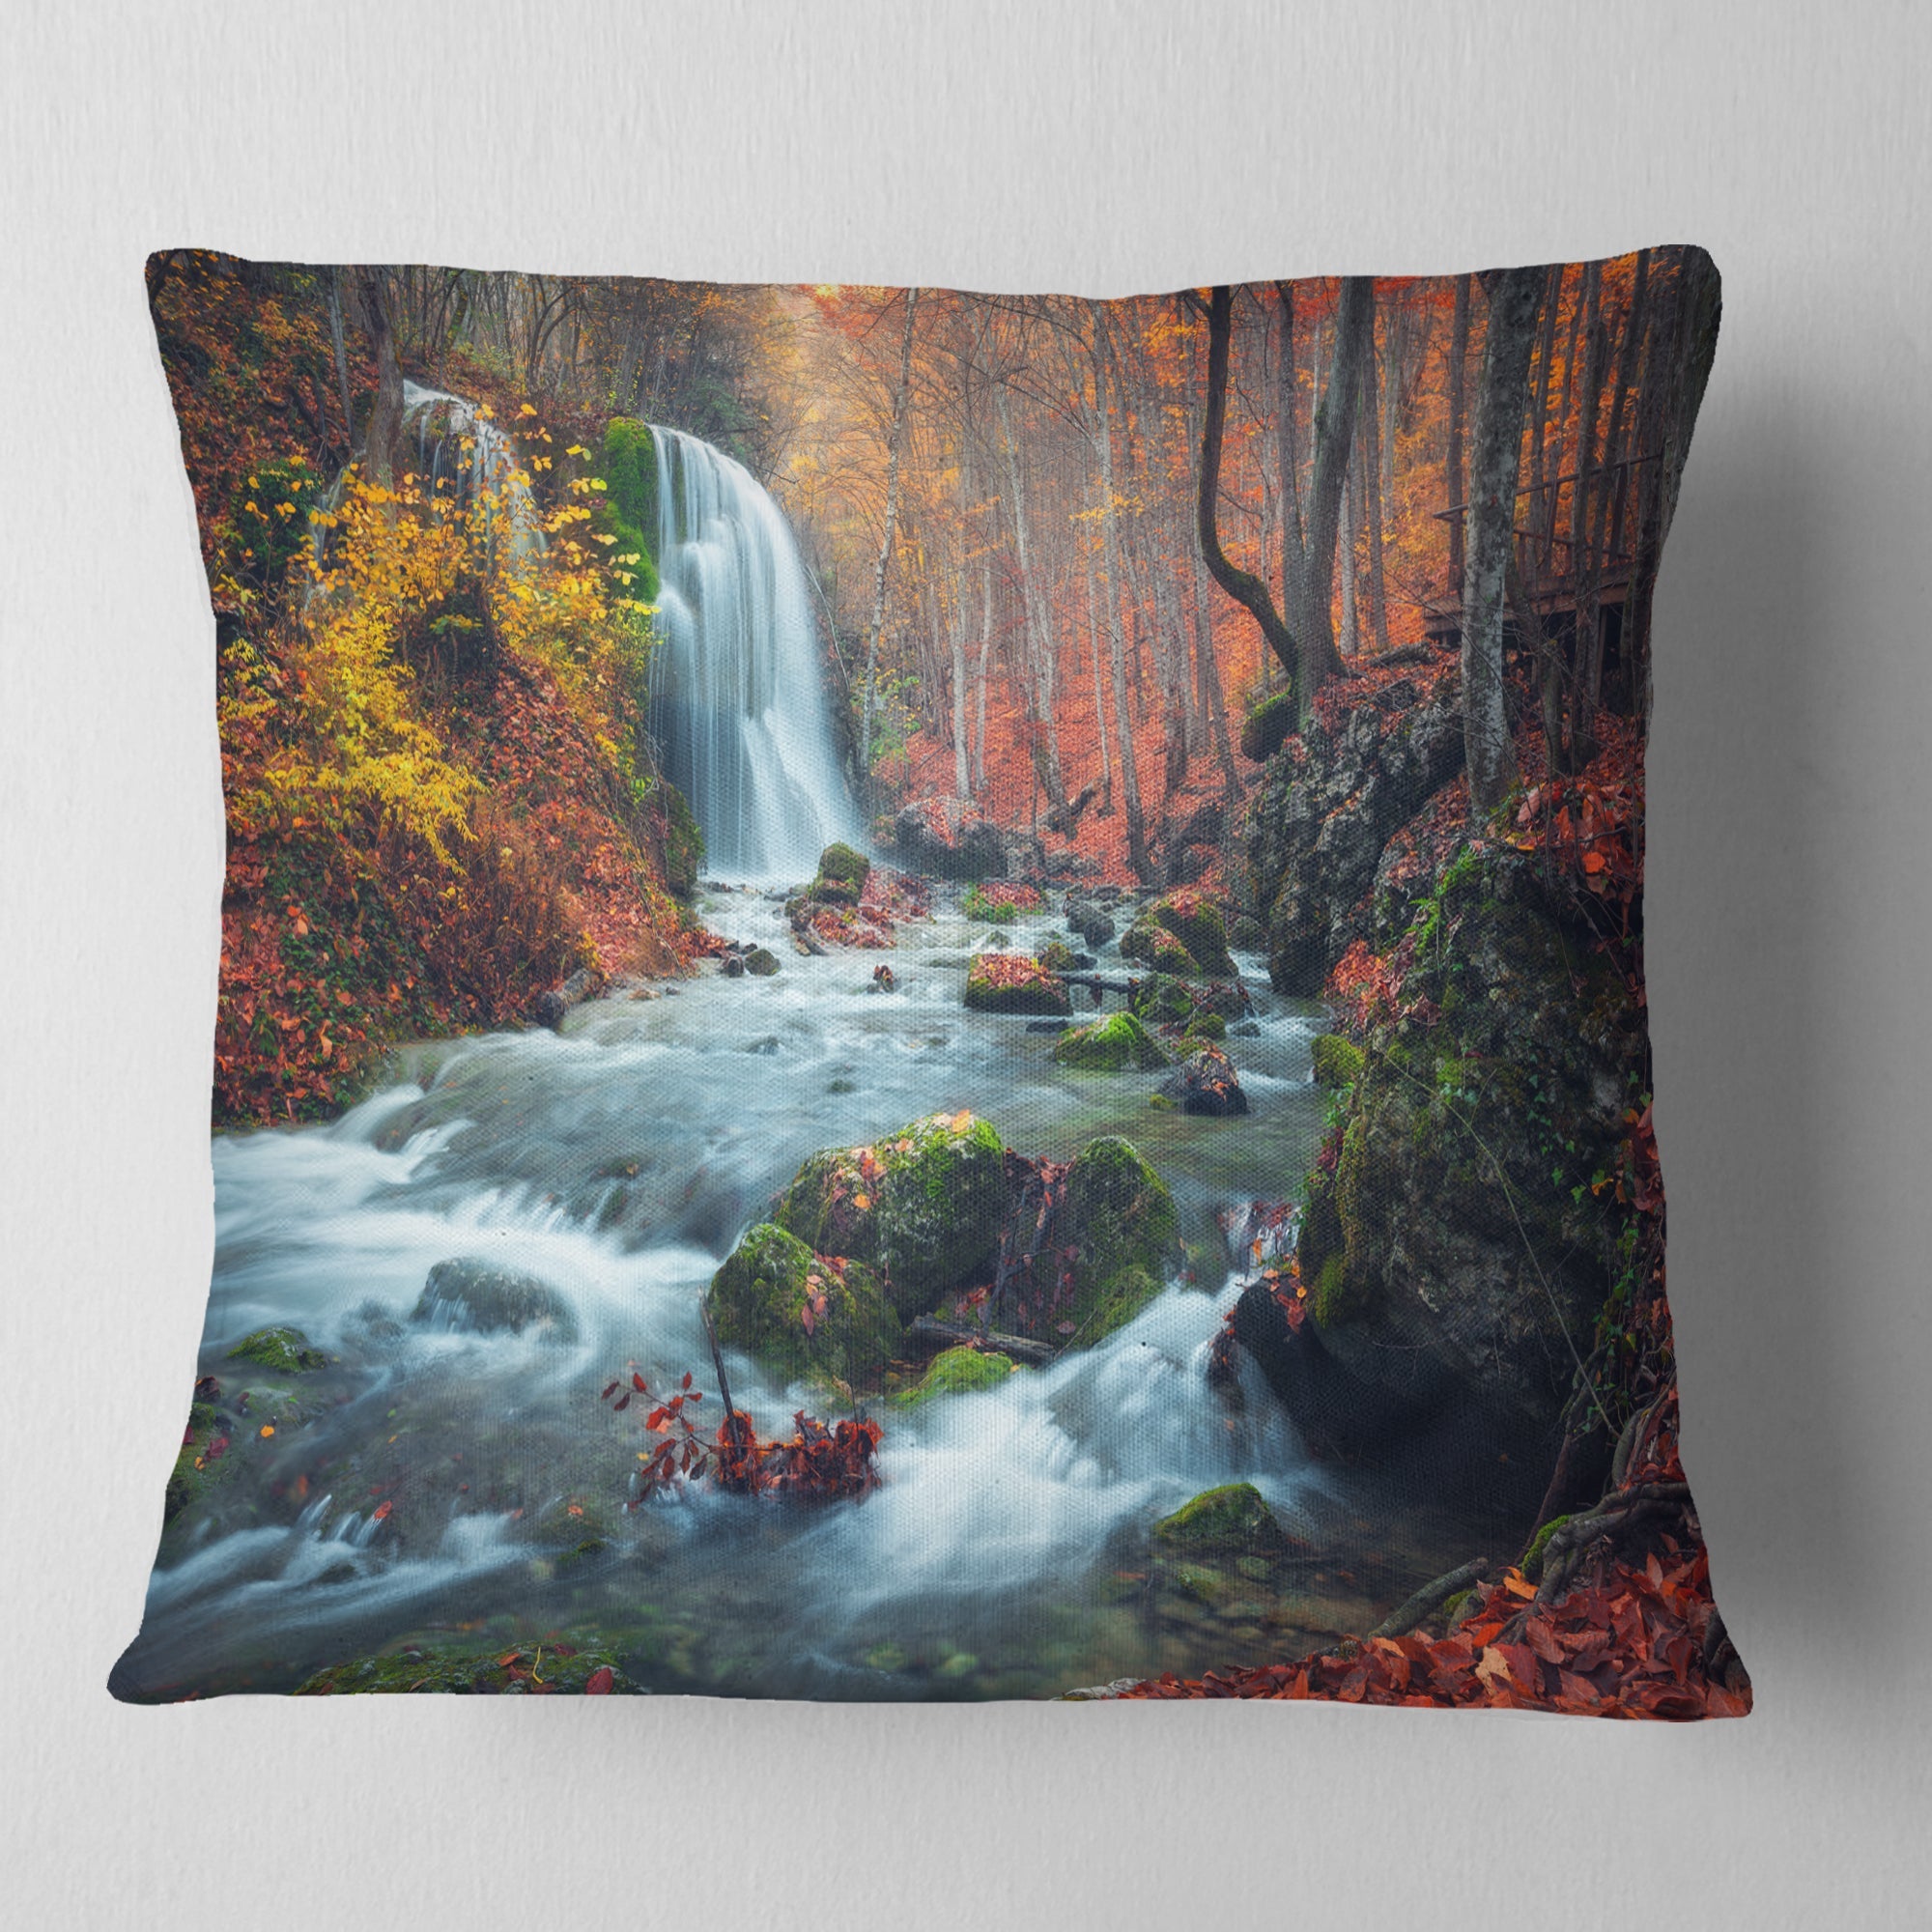 Autumn Mountain Waterfall Long View - Landscape Photography Throw Pillow